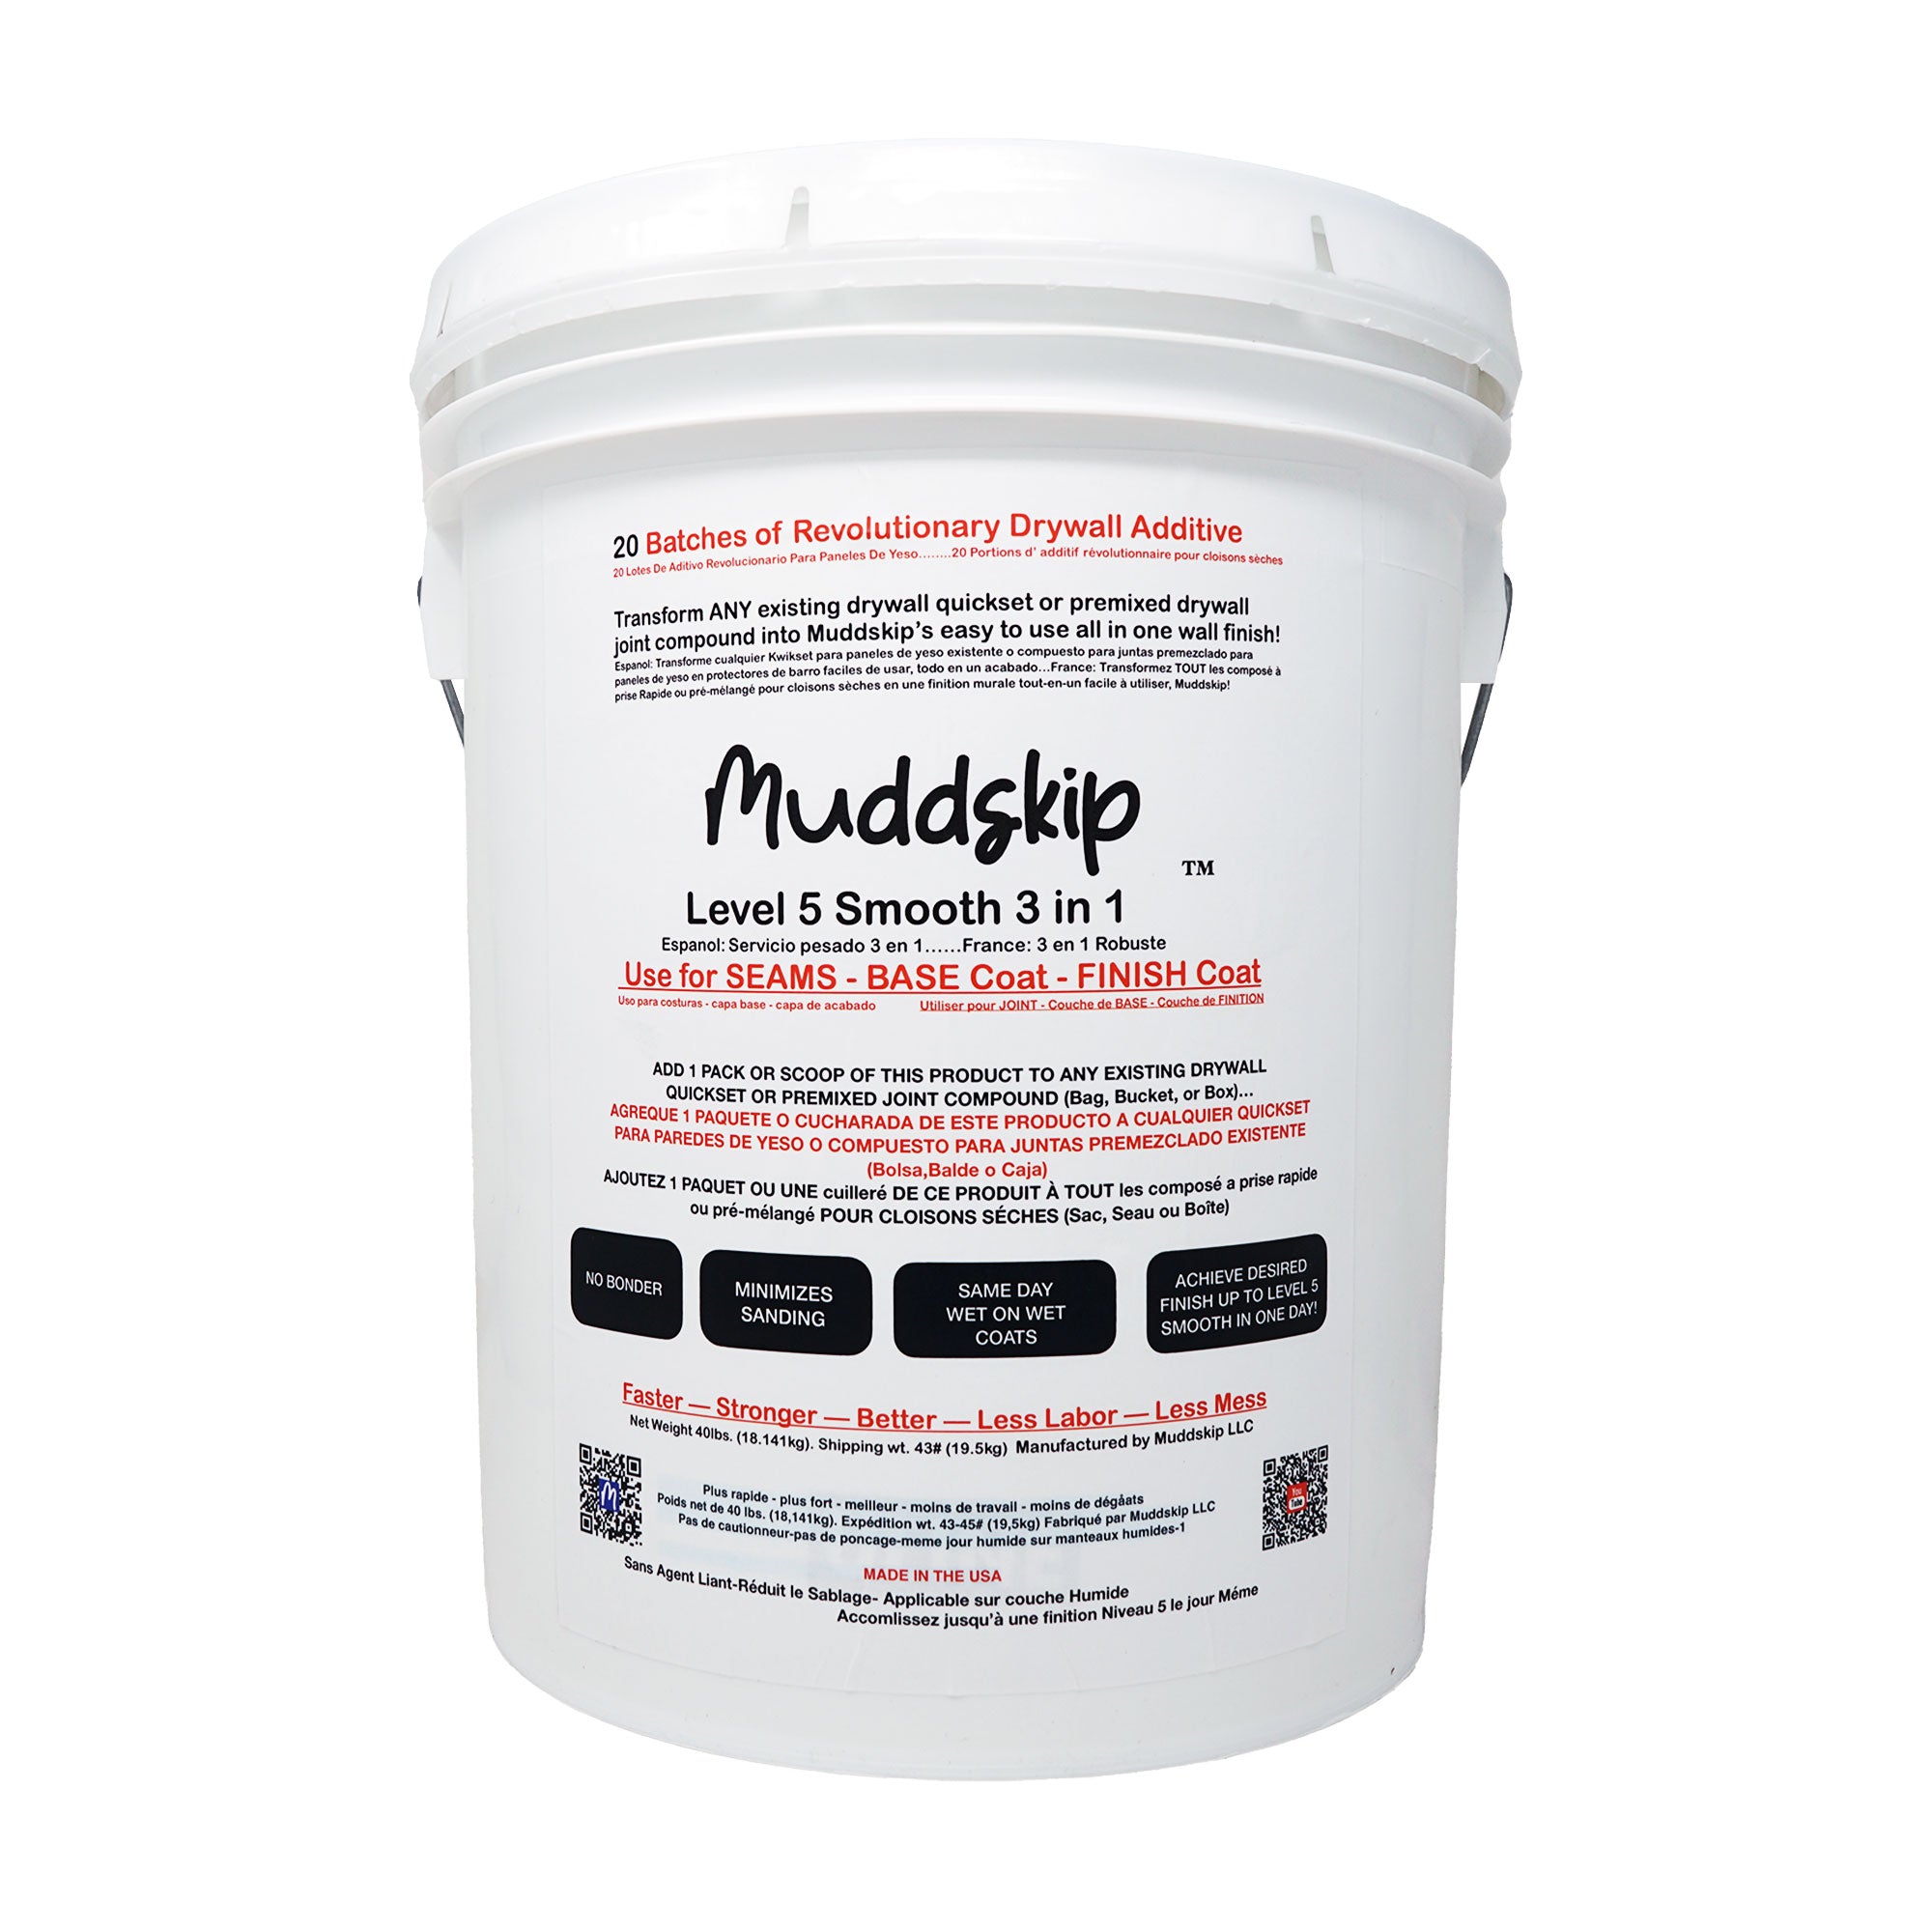 Muddskip Level 5 Smooth 3-in-1 Drywall Additive